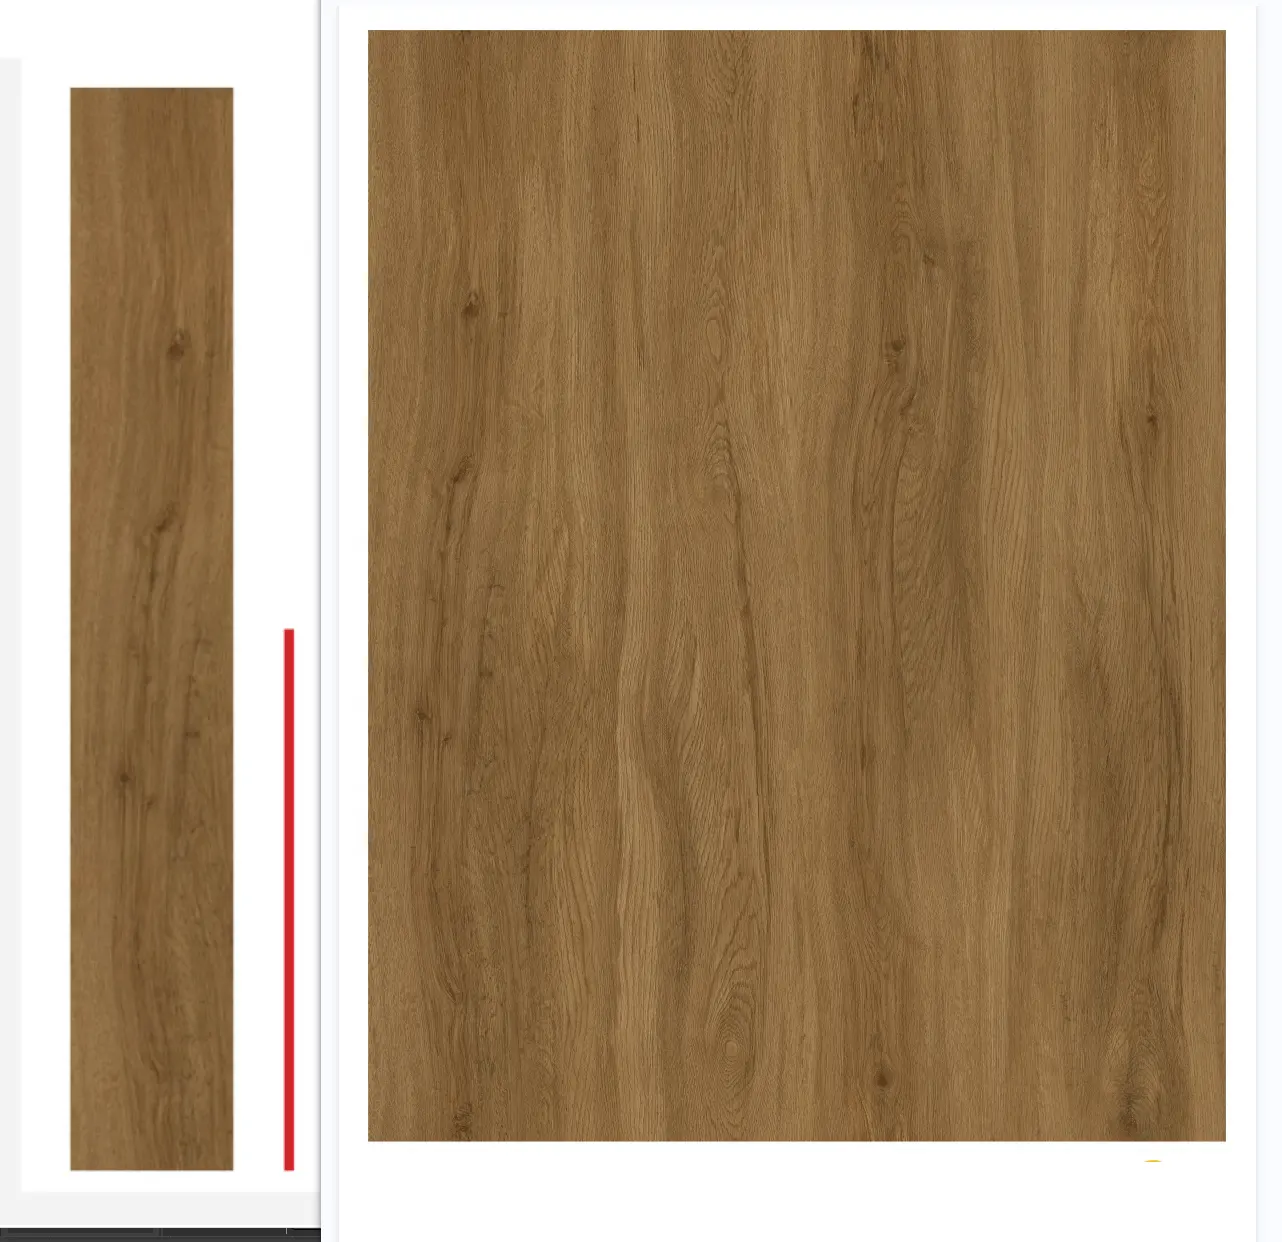 KEPLER v-groove pintado Bever núcleo rígido lujo clic vinilo floorscore CE aprobación SPC tablón piso de vinilo de lujo